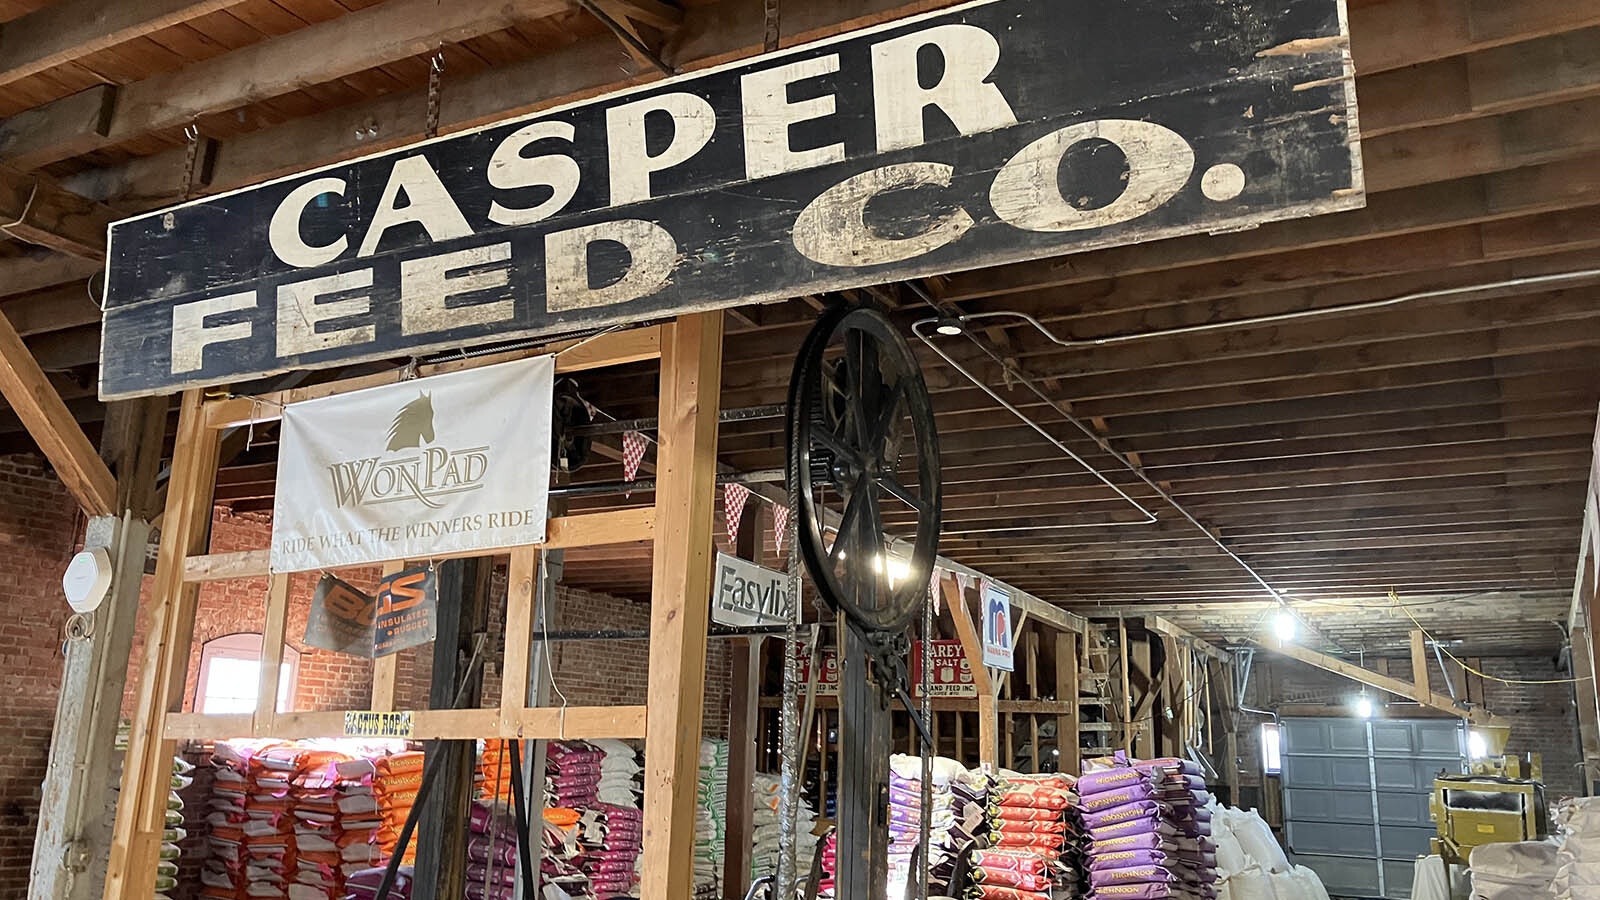 The original Casper Feeds sign hangs in the warehouse.